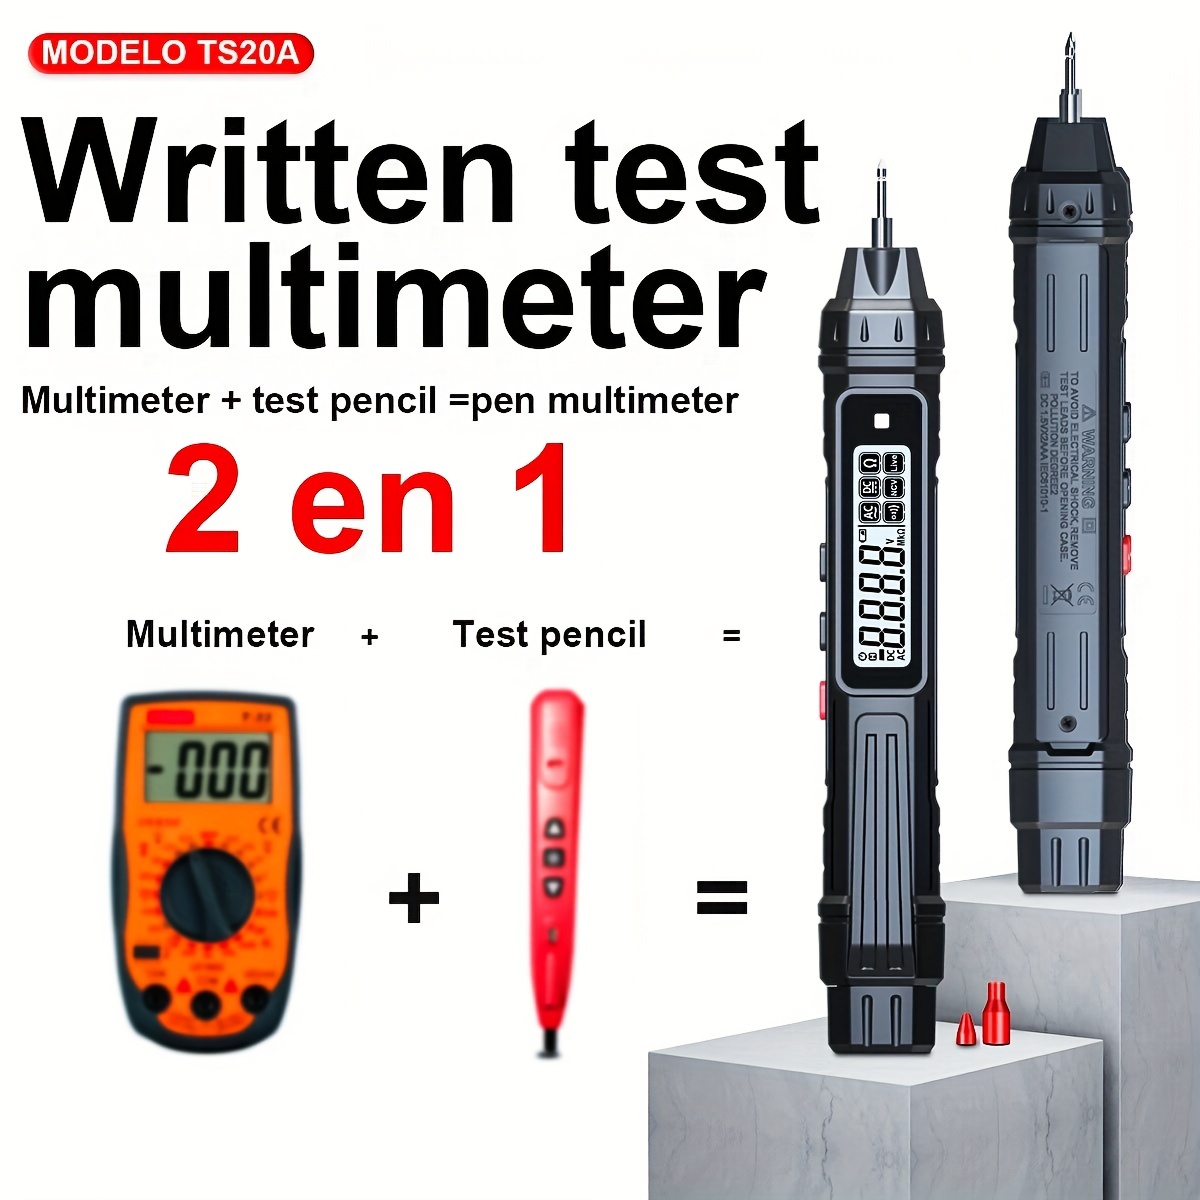 

Digital Multimeter Pen-type Voltage Tester: Accurately Measure Ac/dc Voltage, Resistance & More!